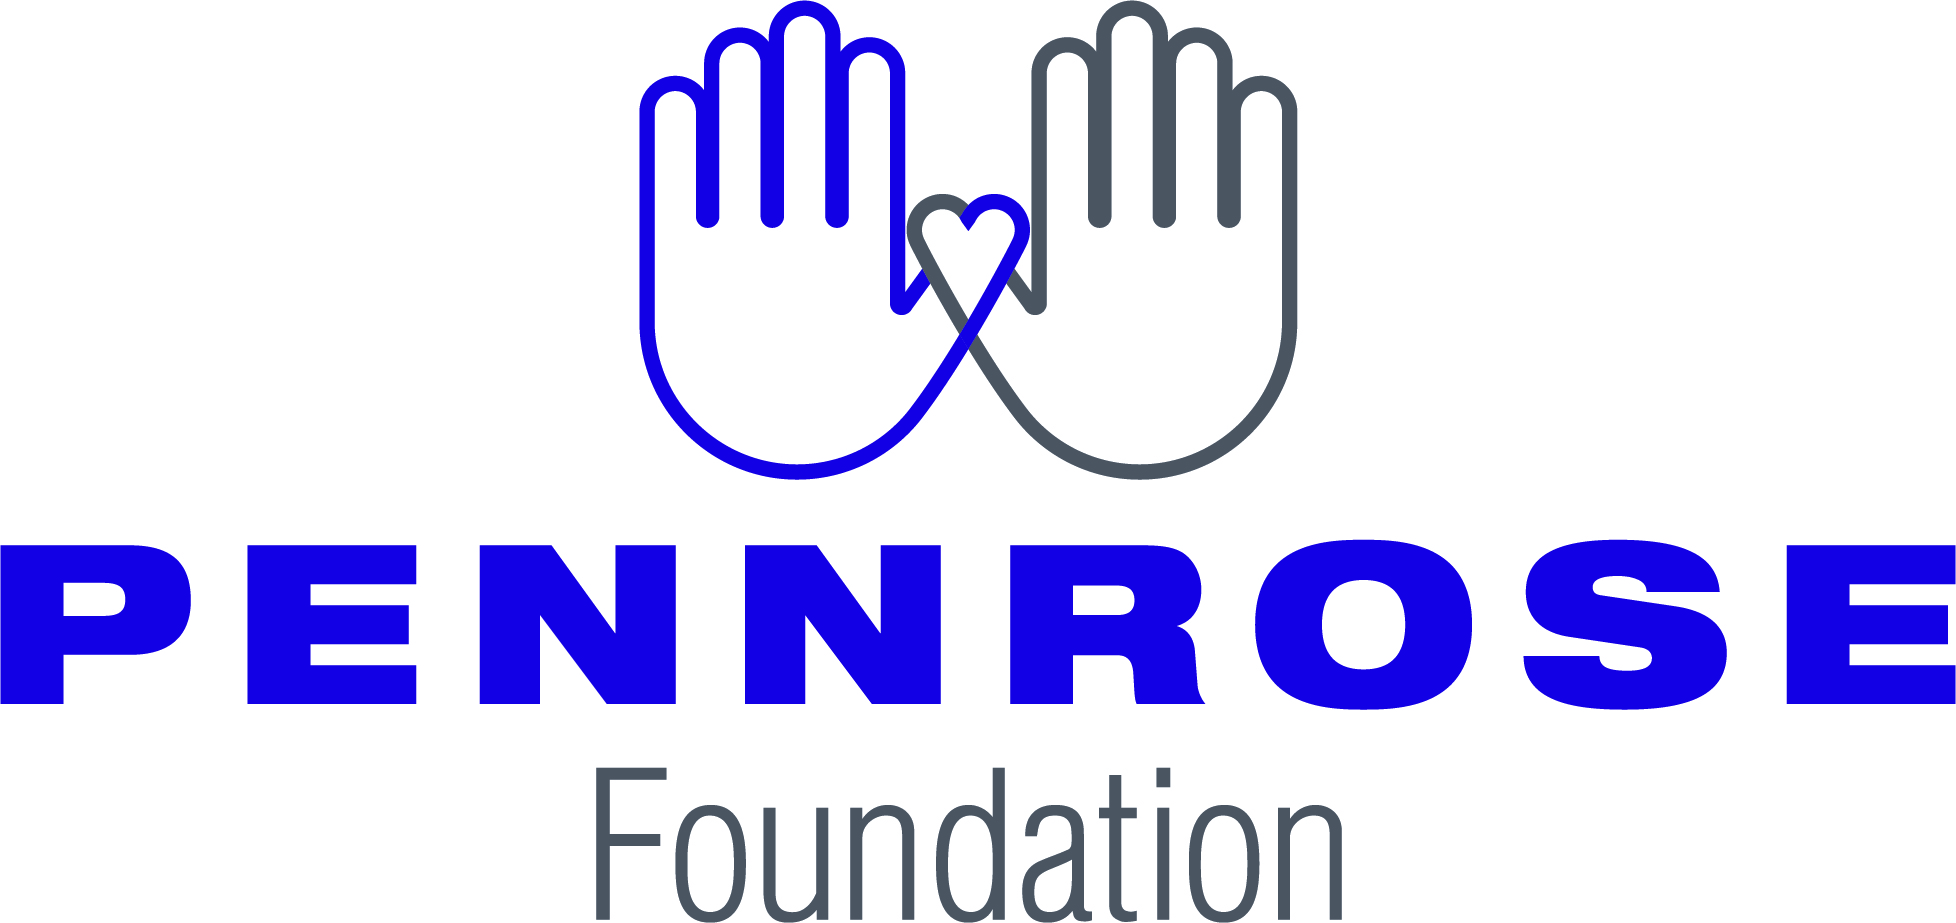 Pennrose Foundation Logo - 4C